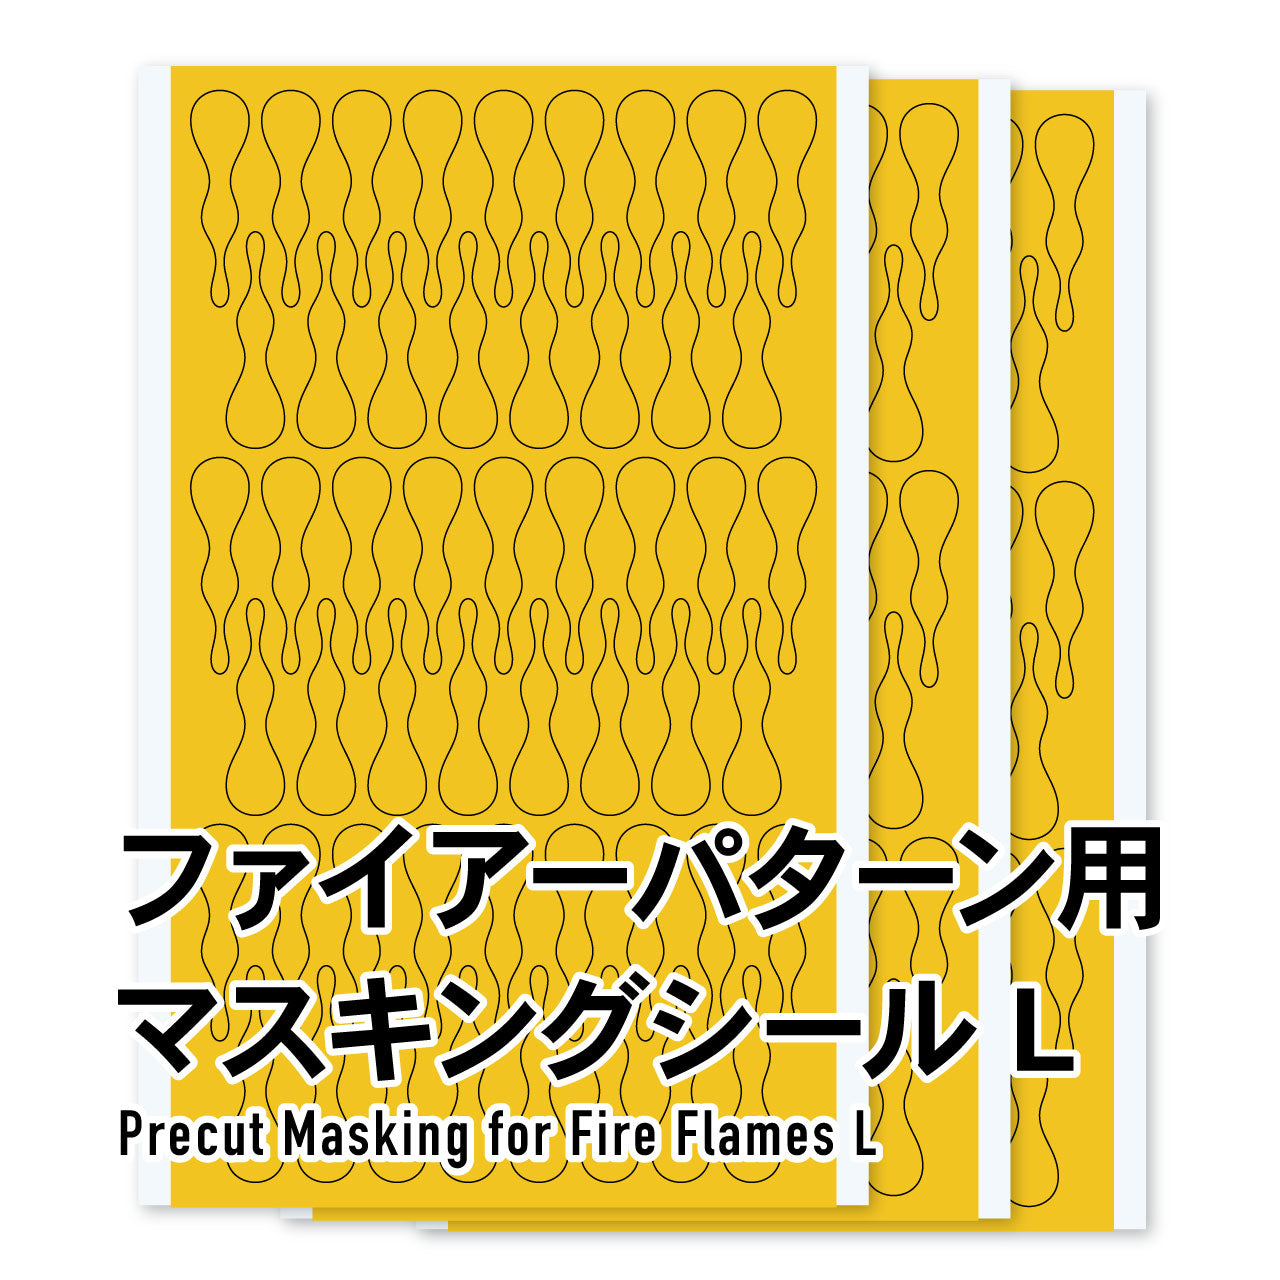 HiQ Parts Precut Masking for Fire Flames (3pcs)